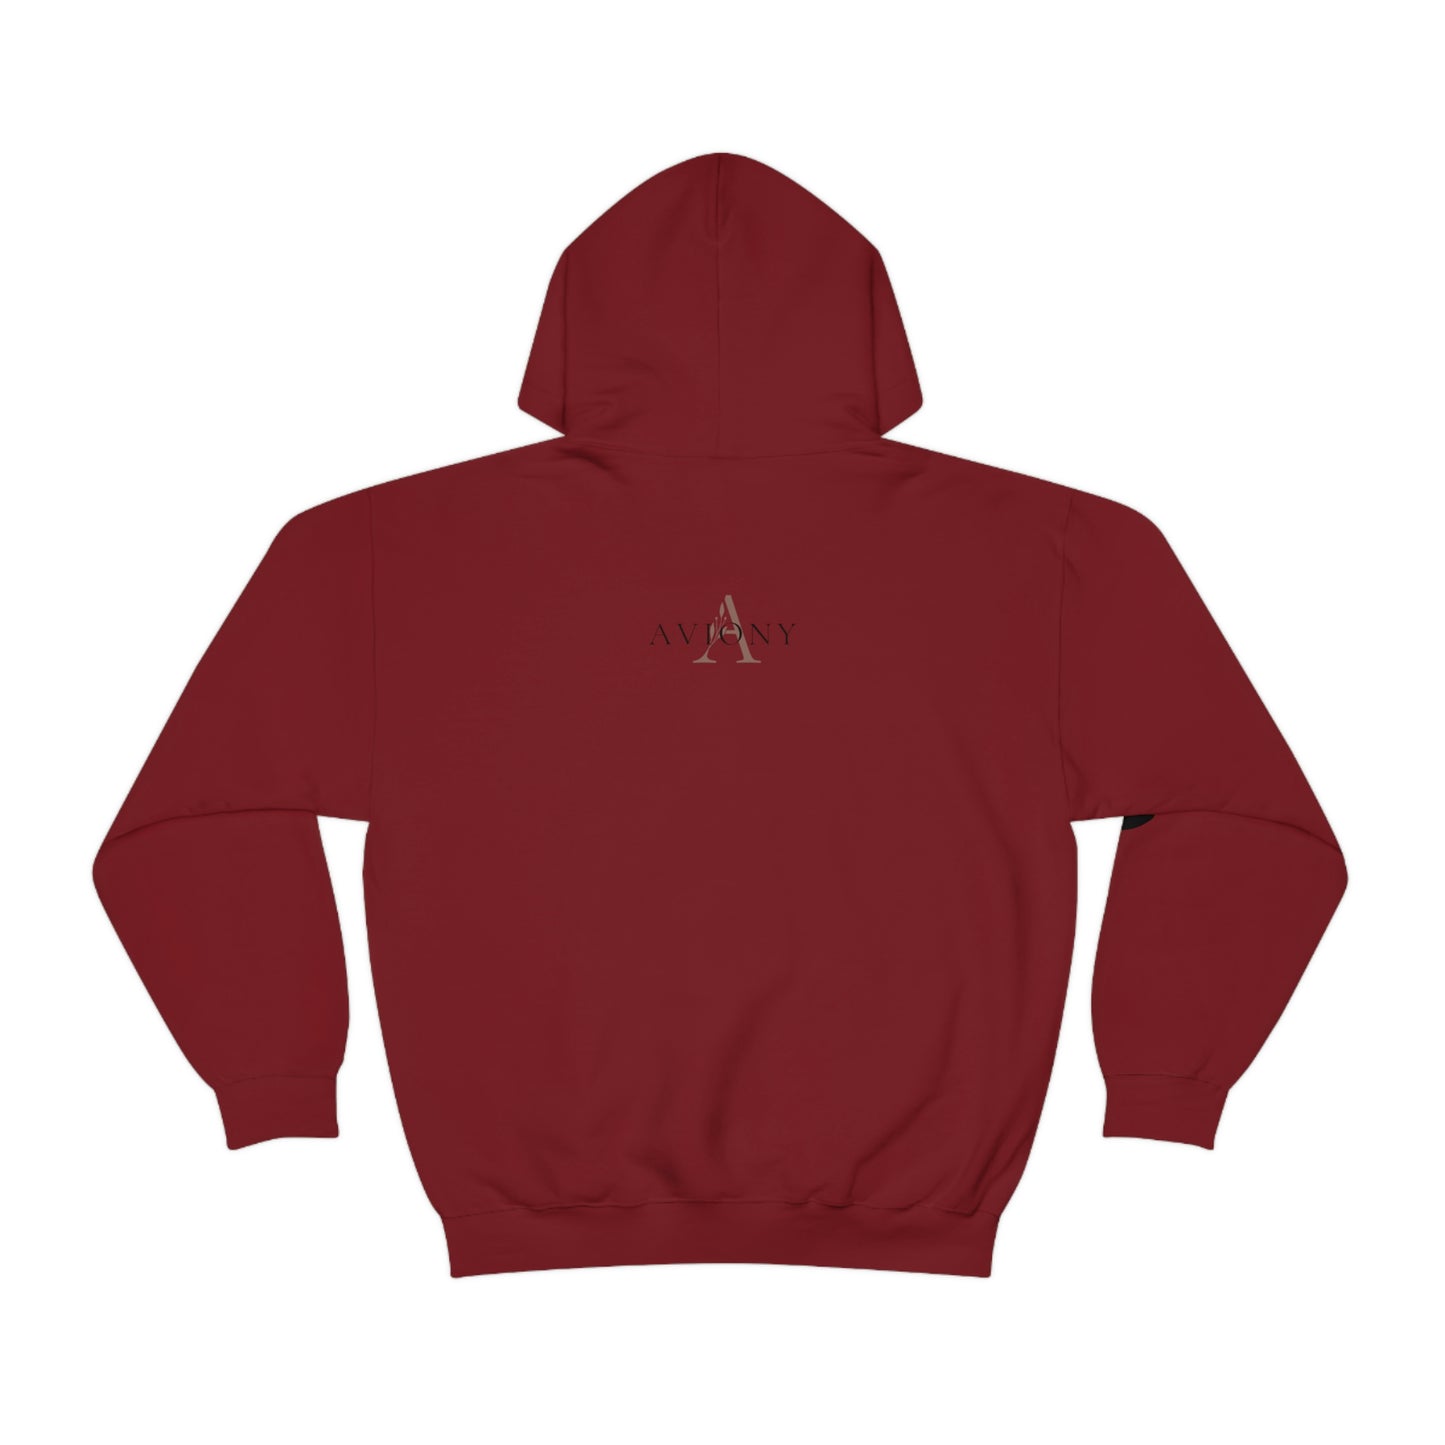 AVIONY Custom Design Unisex Heavy Blend Hooded Sweatshirt